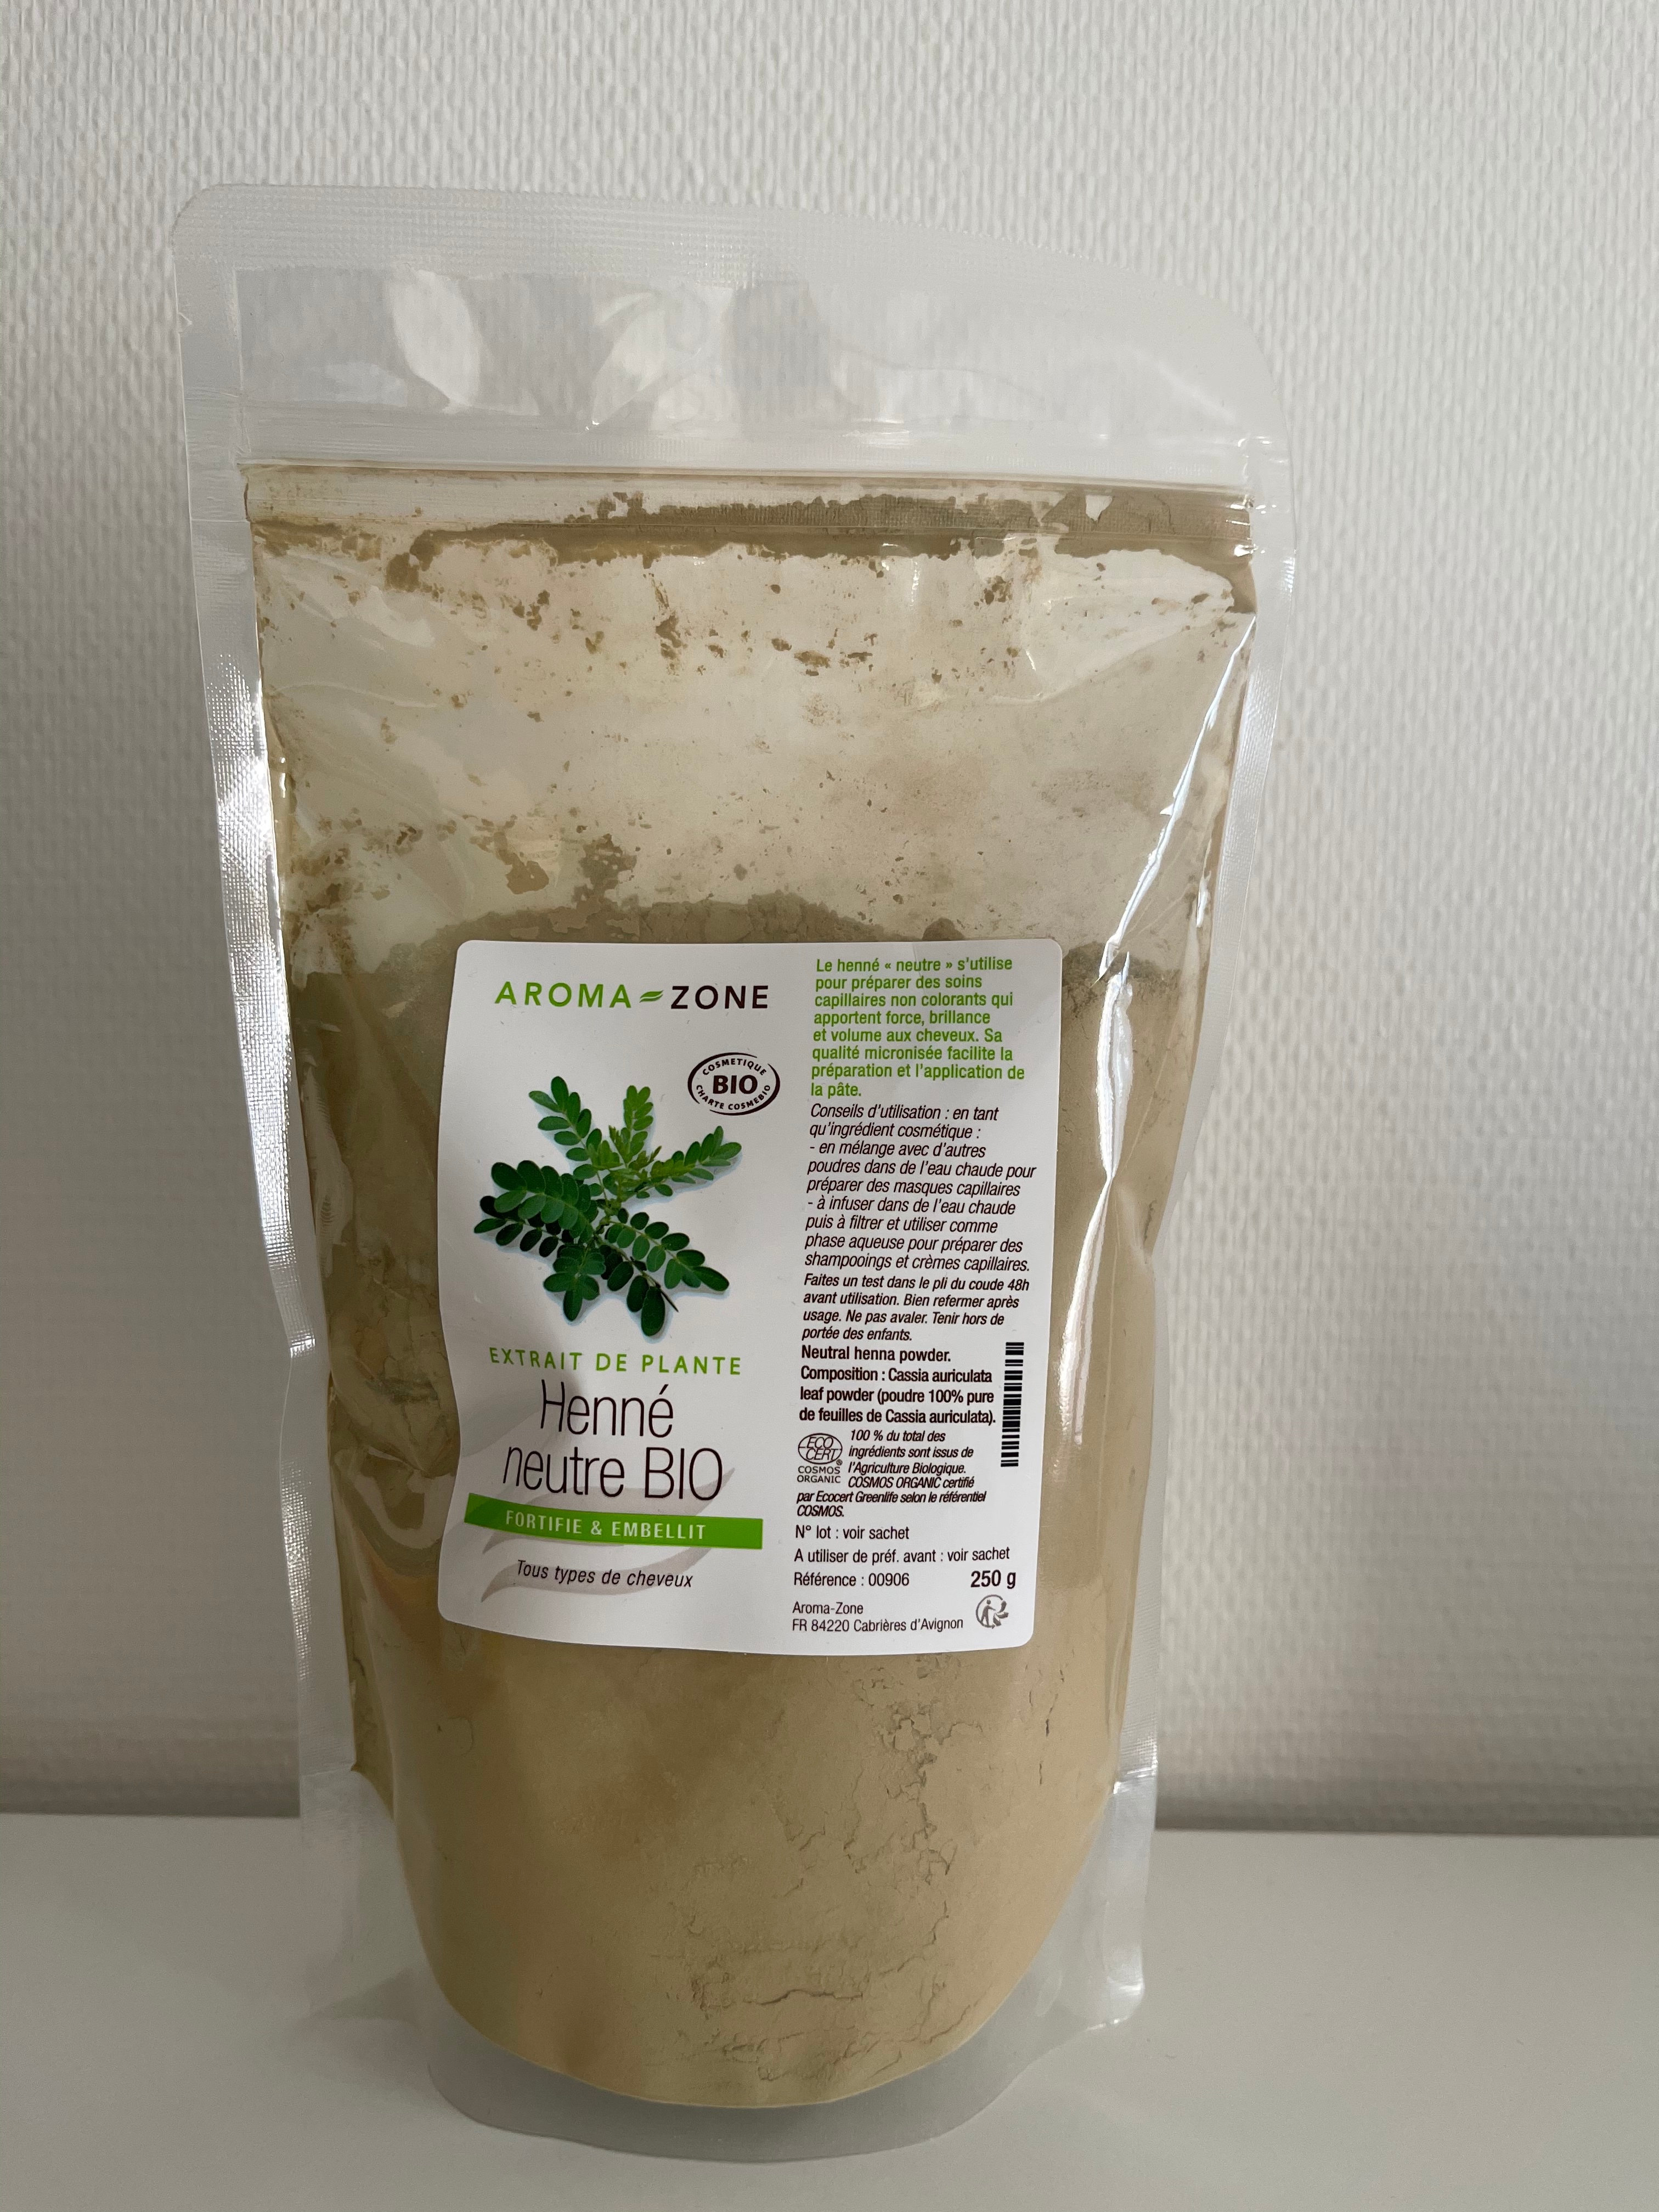 Beauty Troc - Aromazone henné neutre bio en poudre Neuf